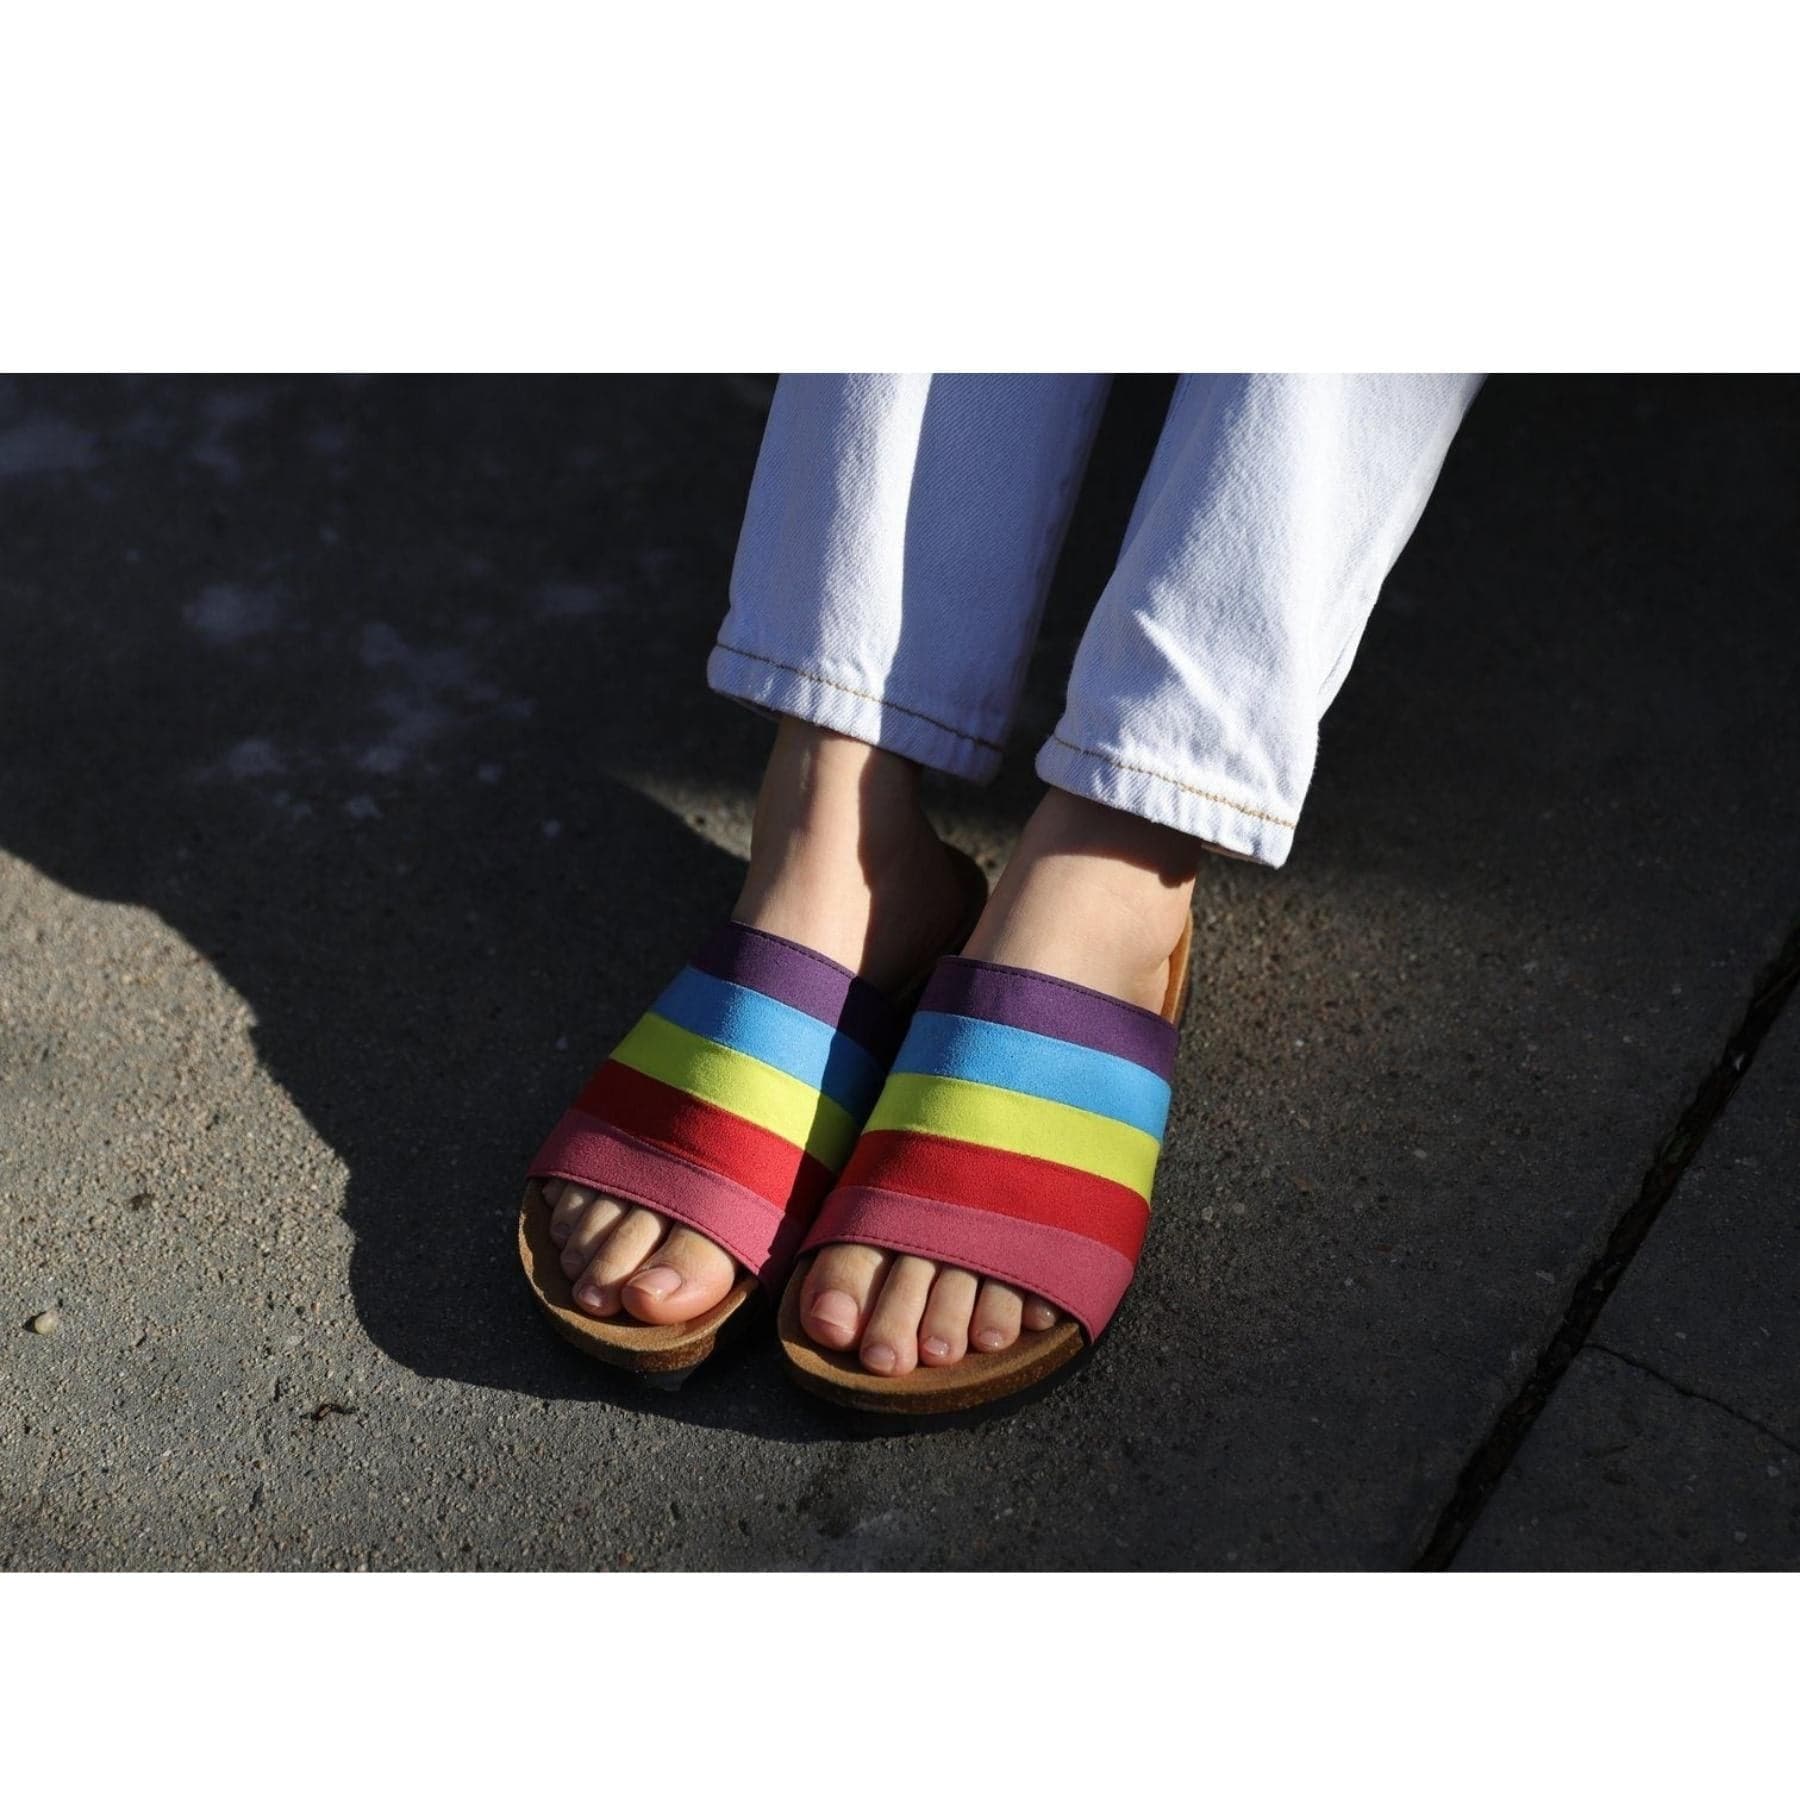 New In Box BC Born In California For You Il Pride Multi Flats Slip On Sandal  8.5 | eBay